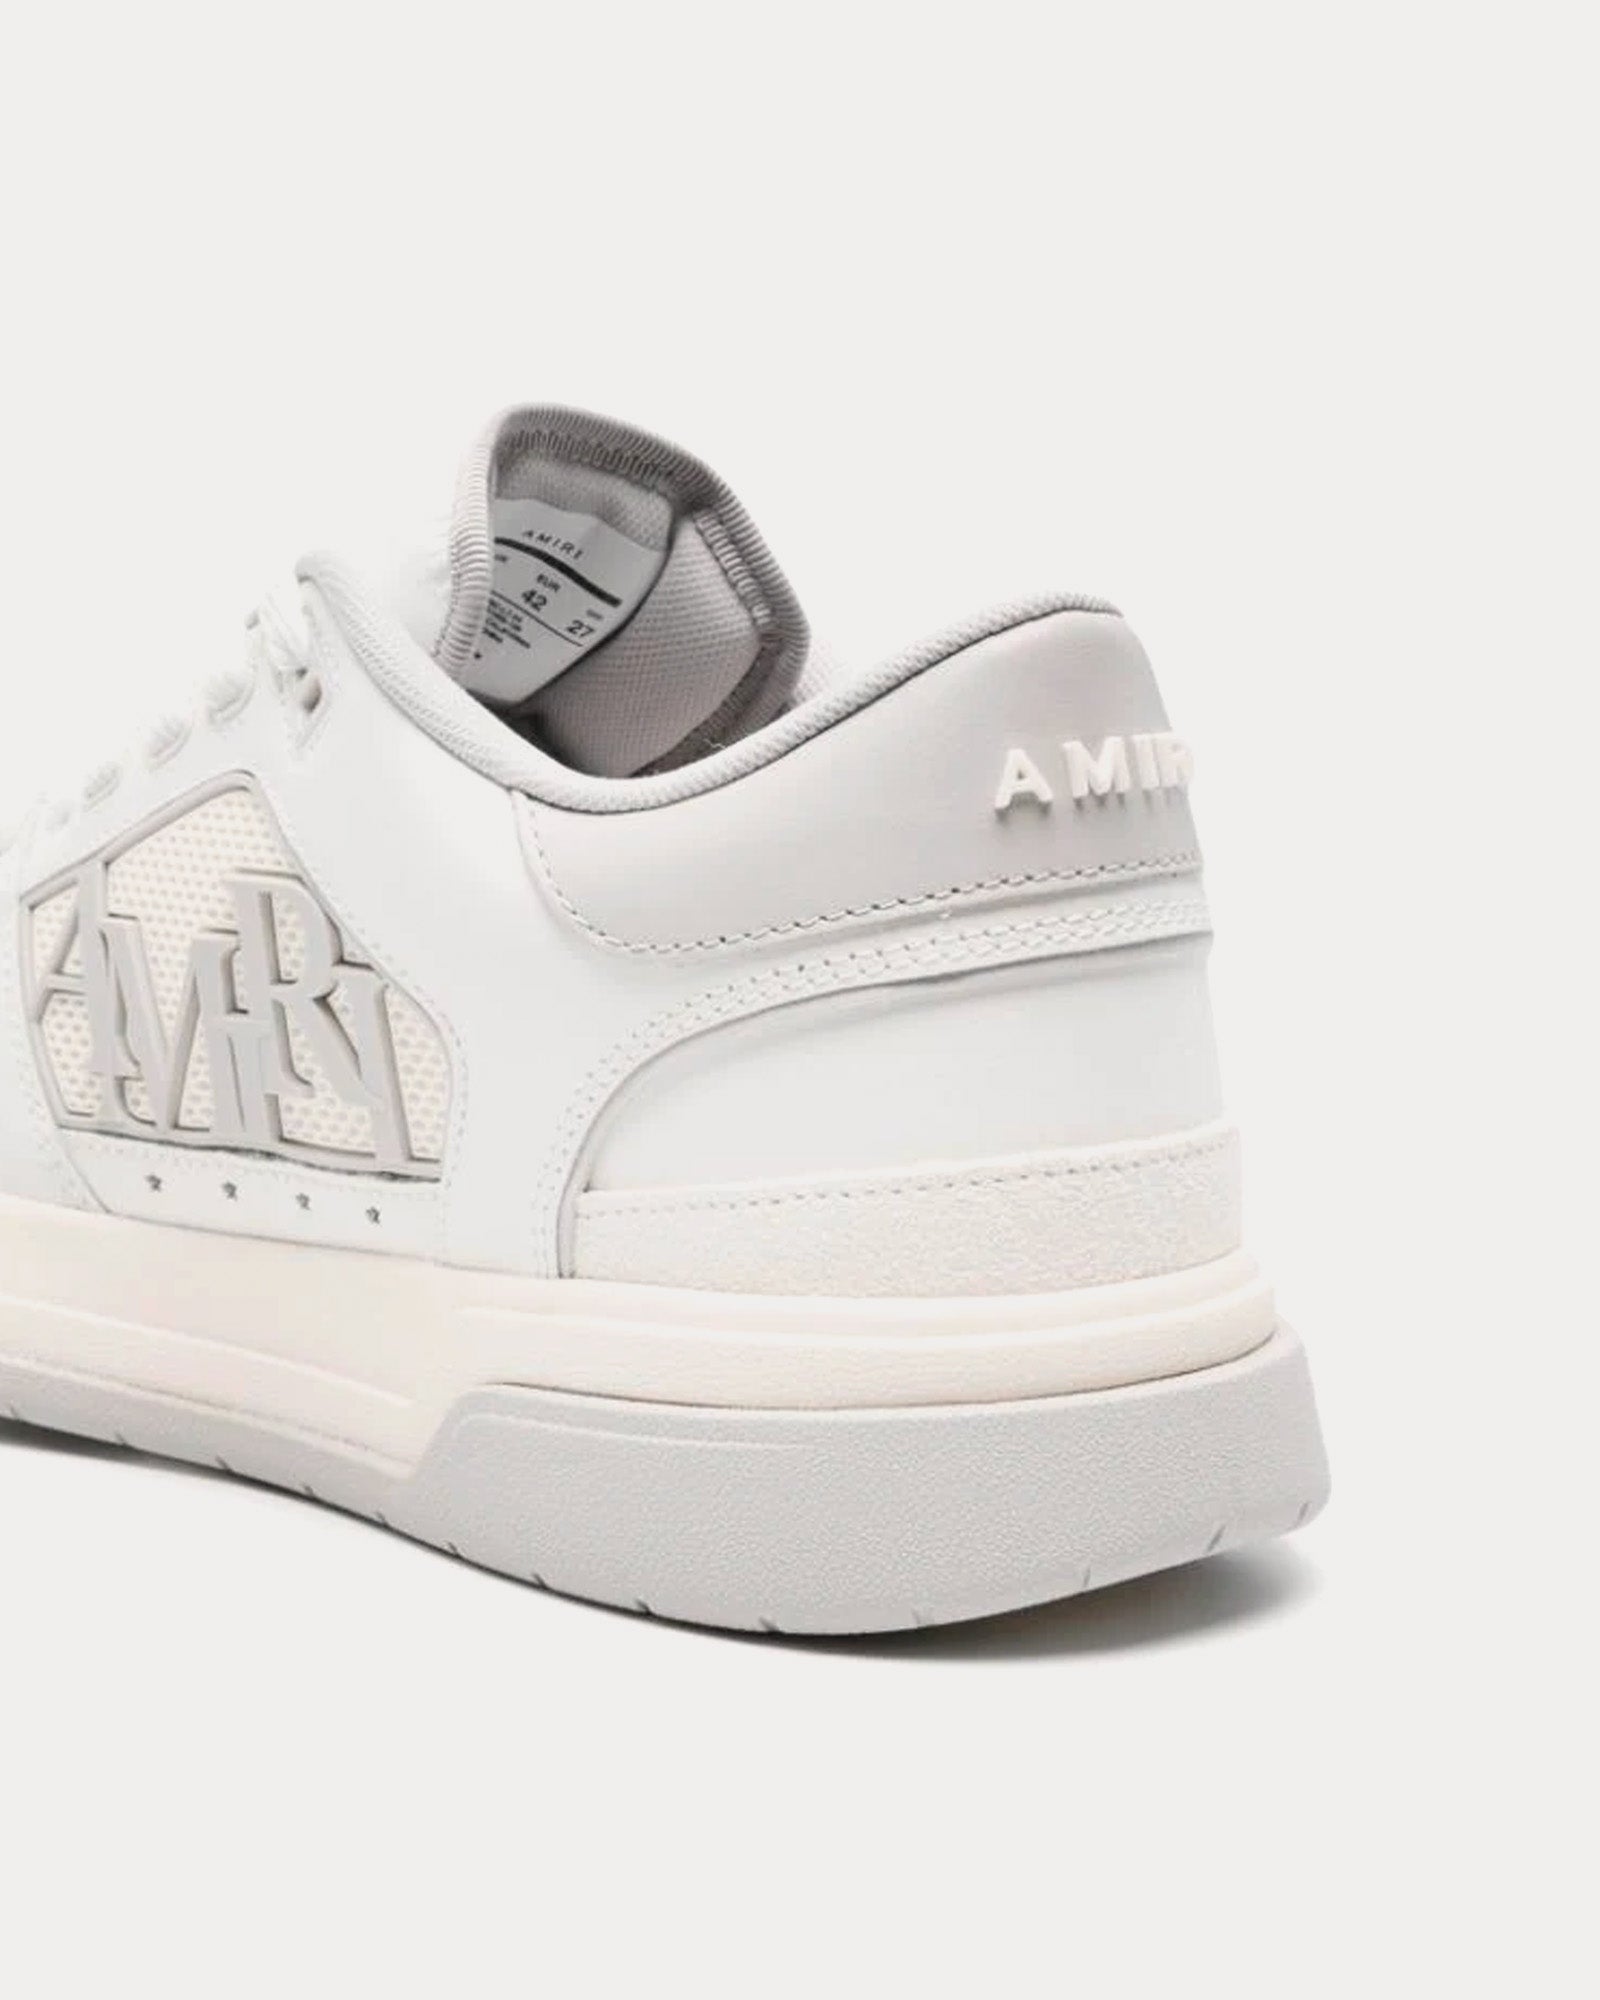 AMIRI - Classic White / Grey Low Top Sneakers